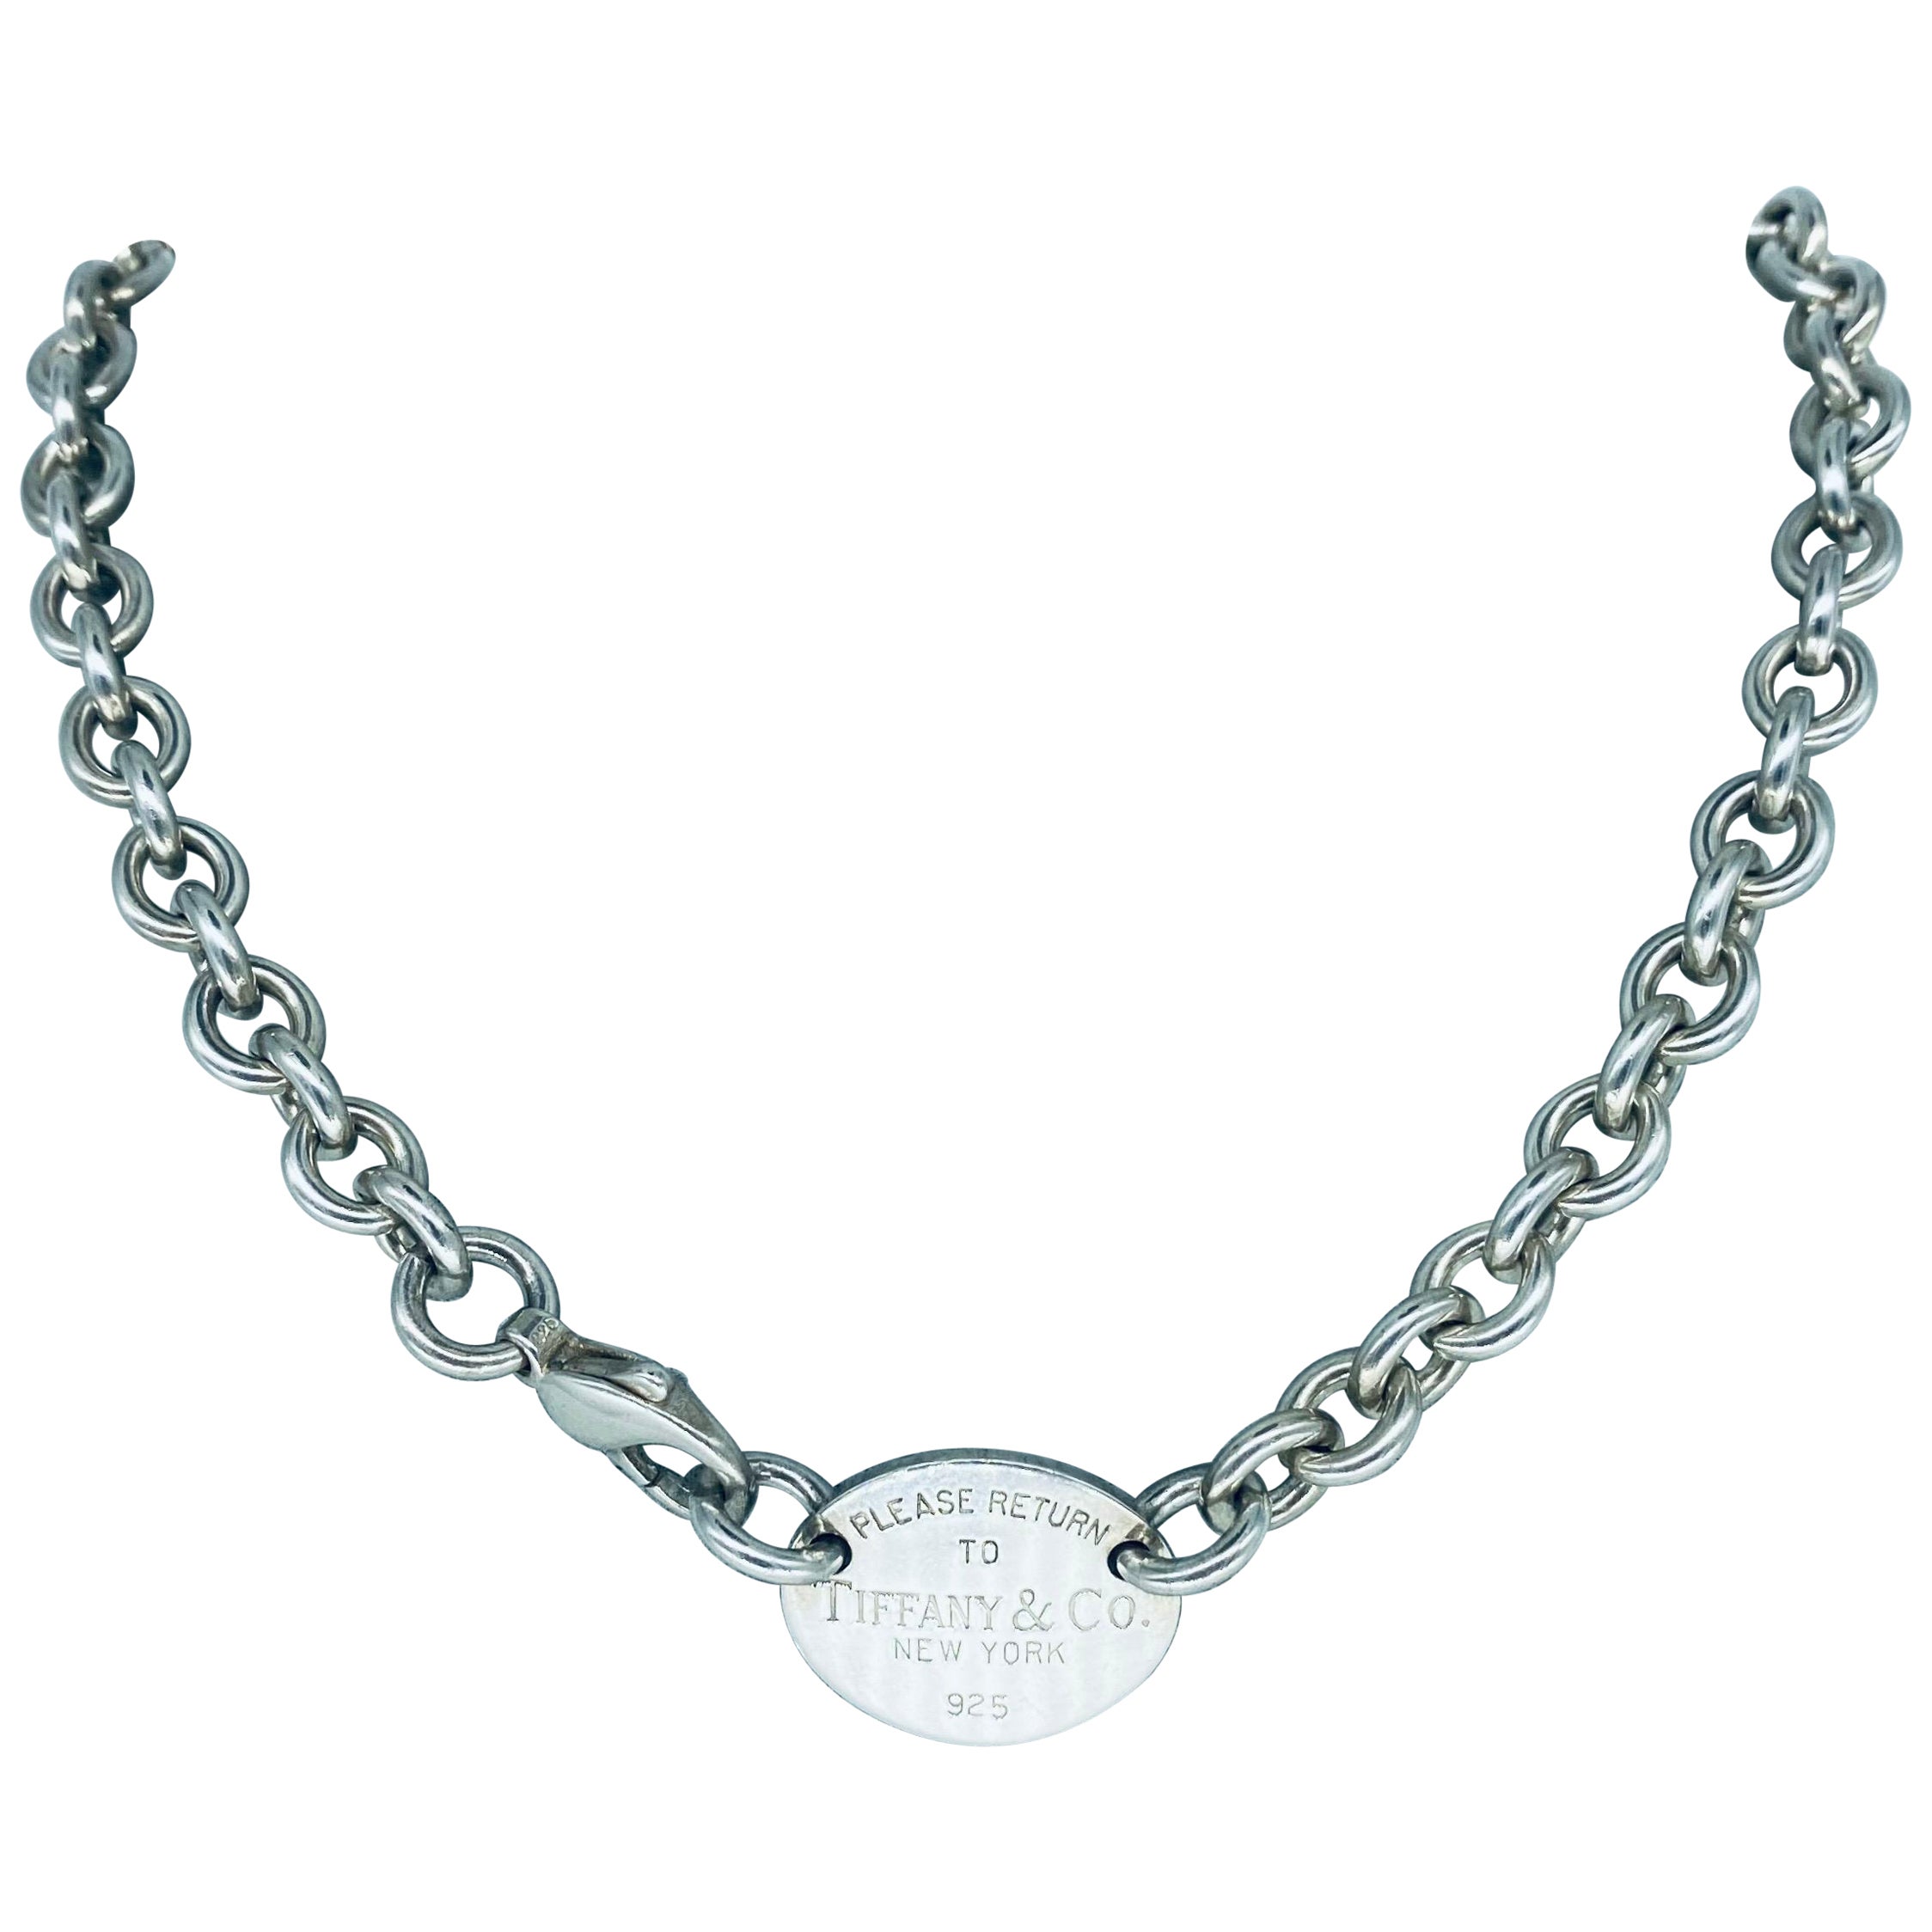 Return to Tiffany Tiffany & Co. Oval Tag Necklace in Silver | Necklace, Tiffany  necklace, Necklace outfit